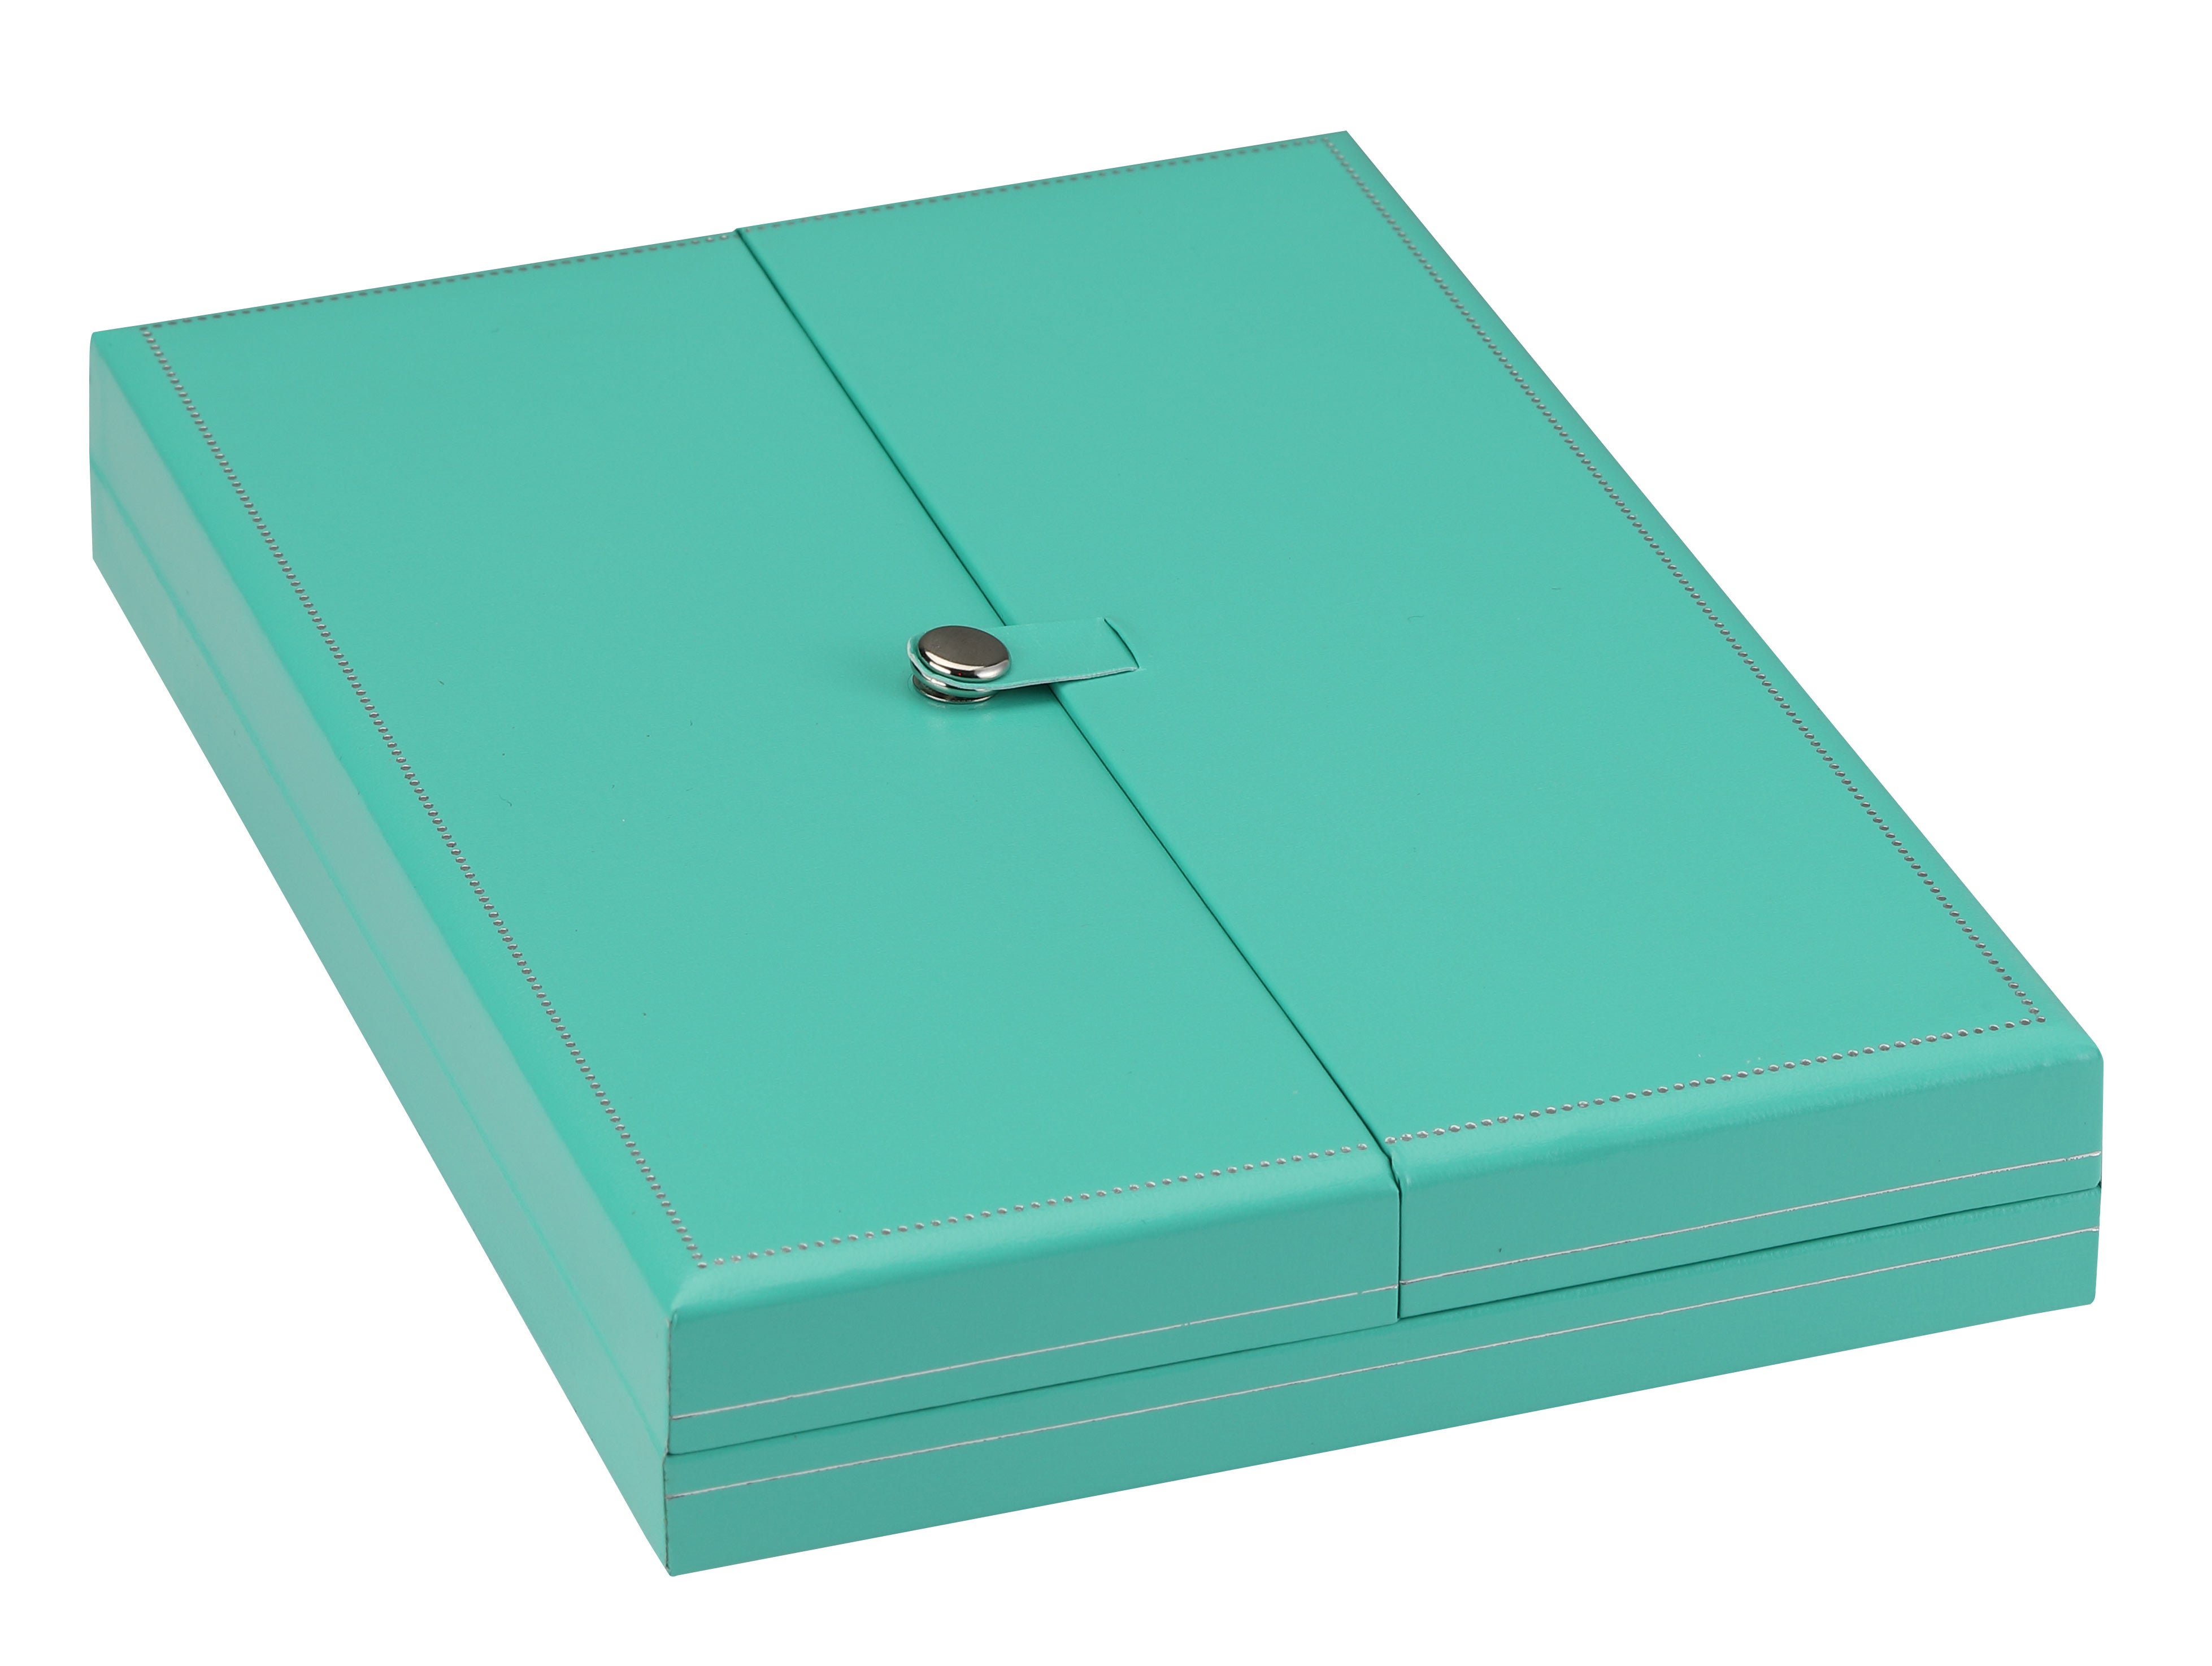 "Manhattan" 2-Door Necklace Box in Turquoise/Silver Trim